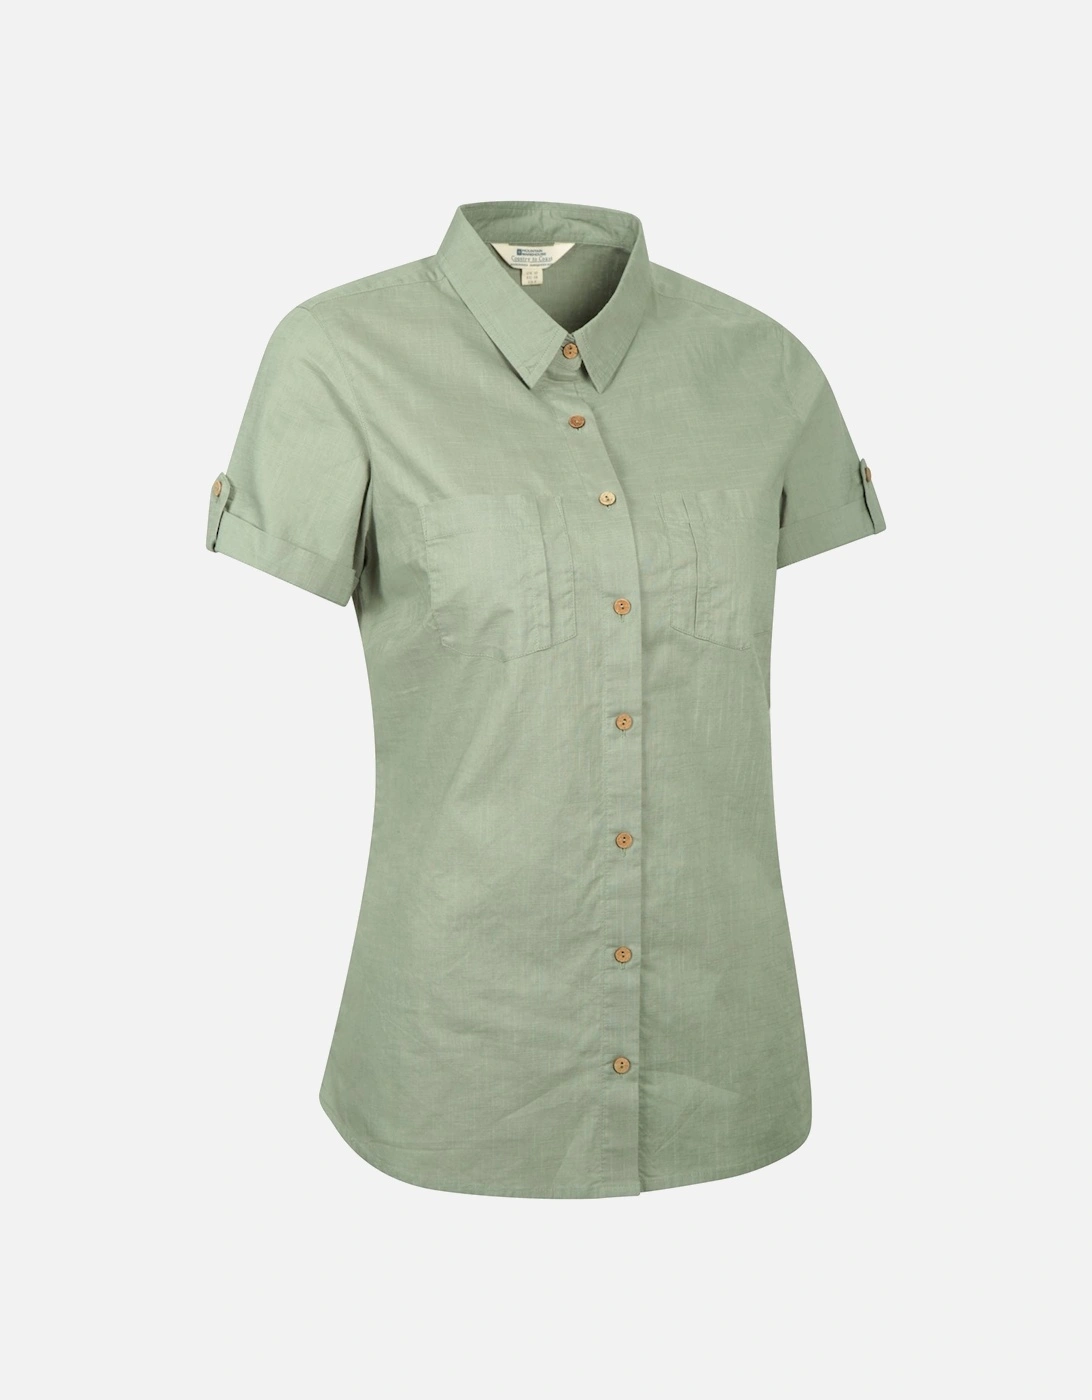 Womens/Ladies Coconut Short-Sleeved Shirt